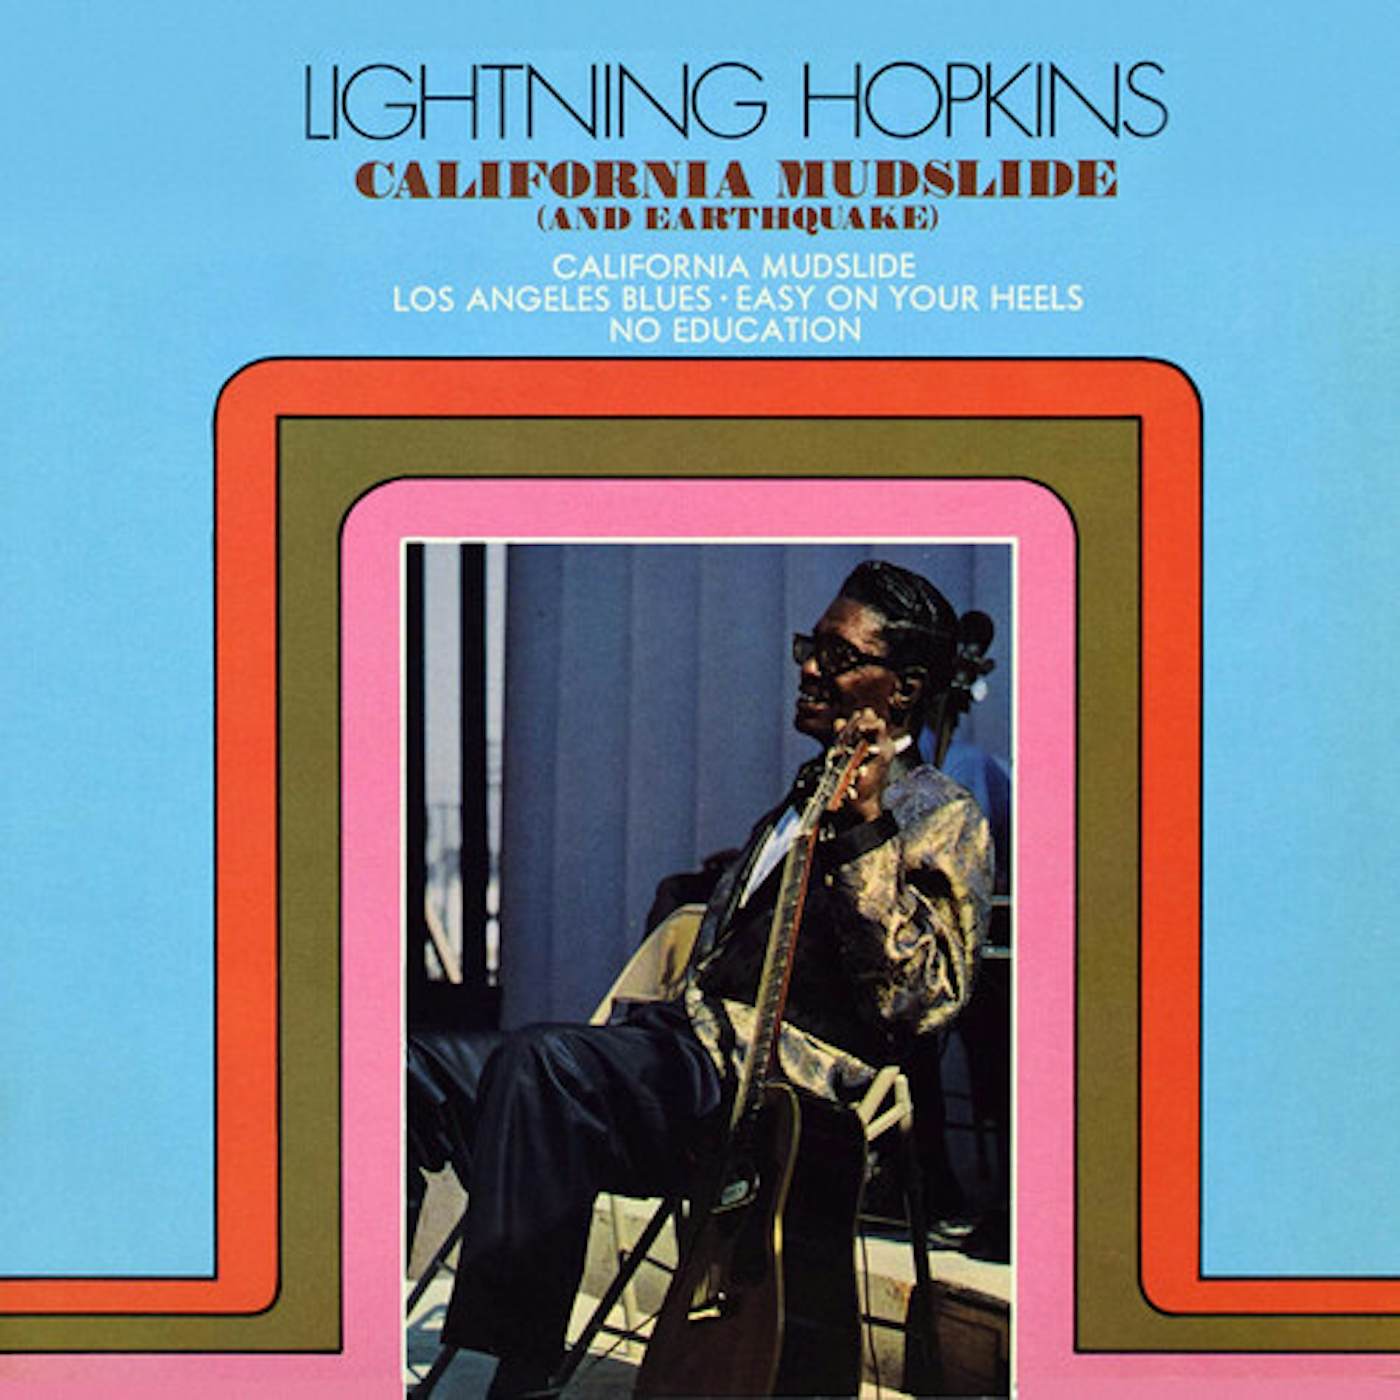 Lightnin' Hopkins CALIFORNIA MUDSLIDE (AND EARTHQUAKE) CD